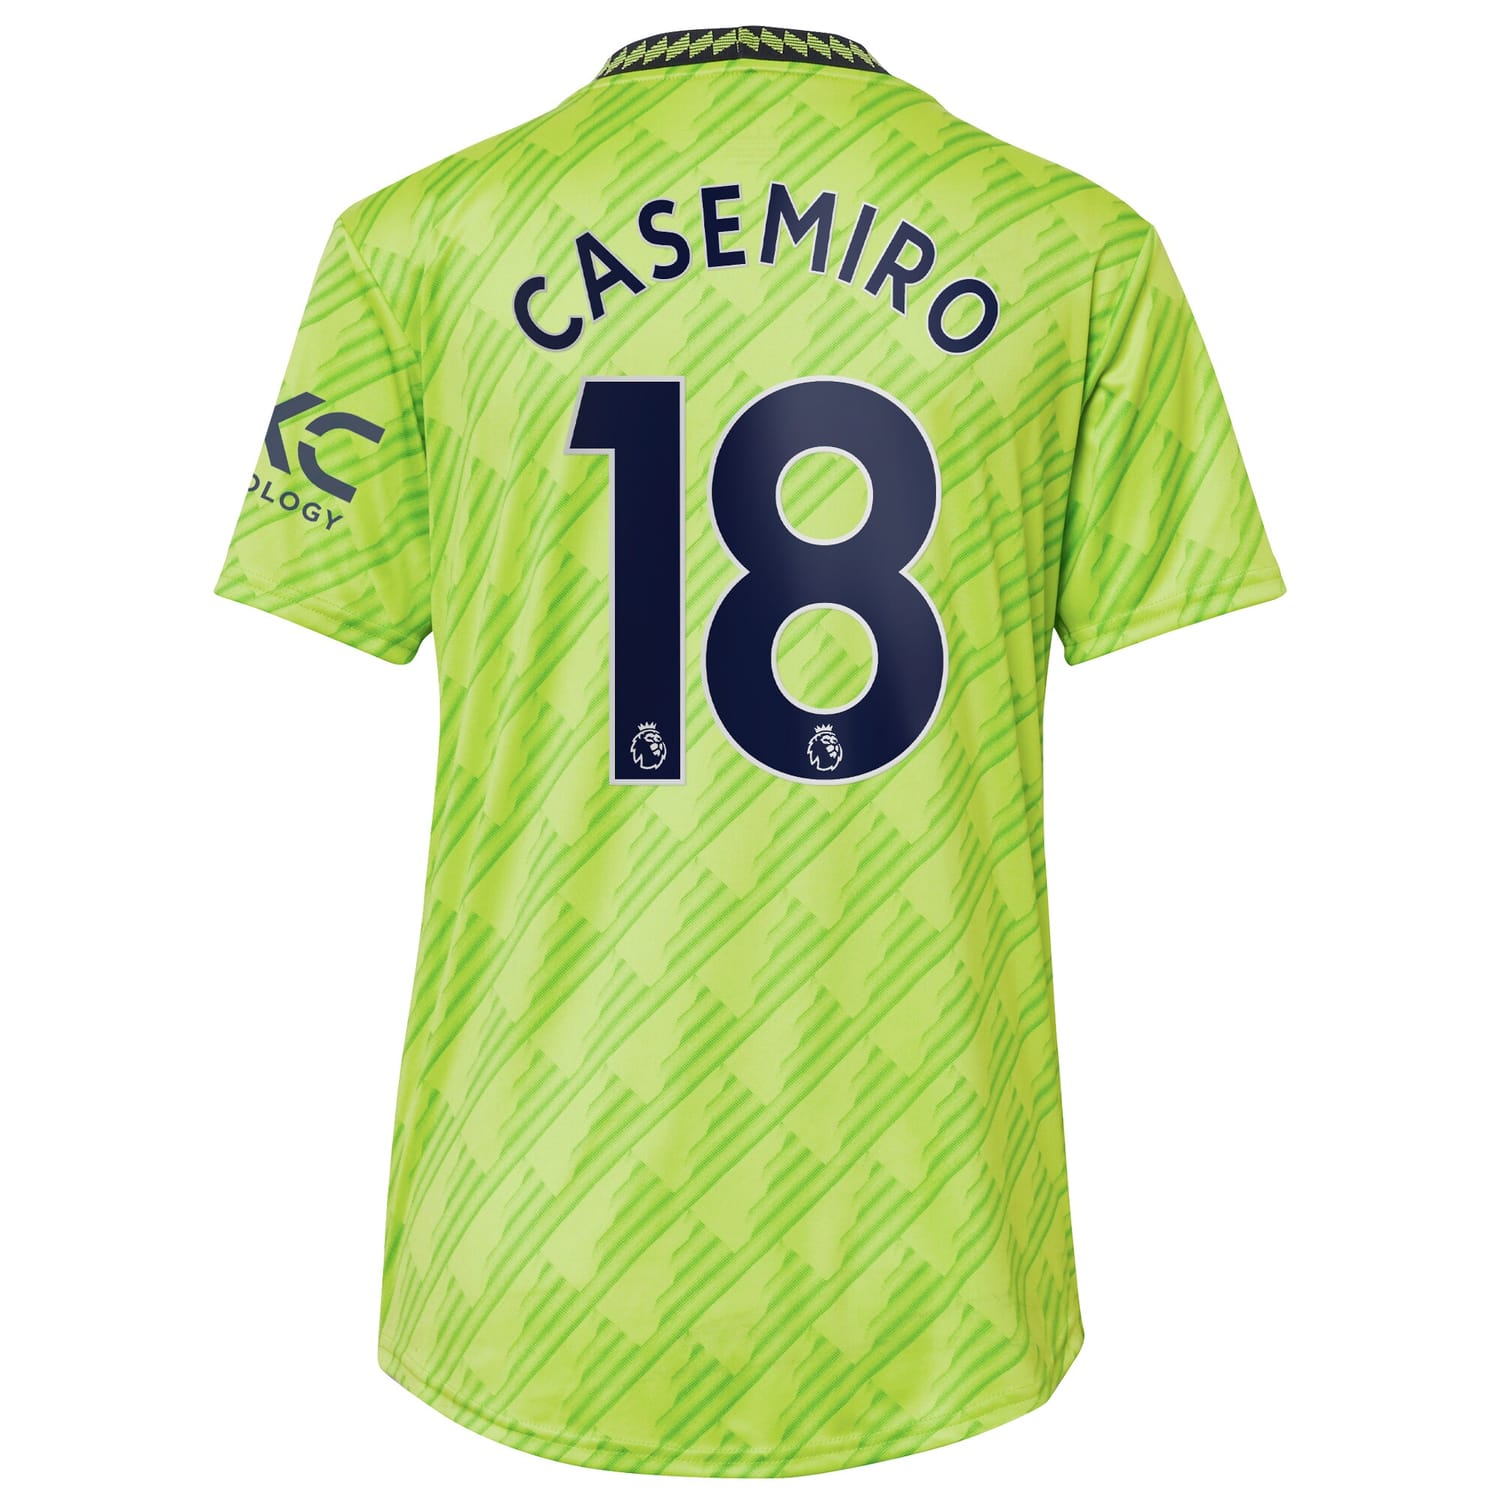 Premier League Manchester United Third Jersey Shirt Neon Green 2022-23 player Casemiro printing for Women